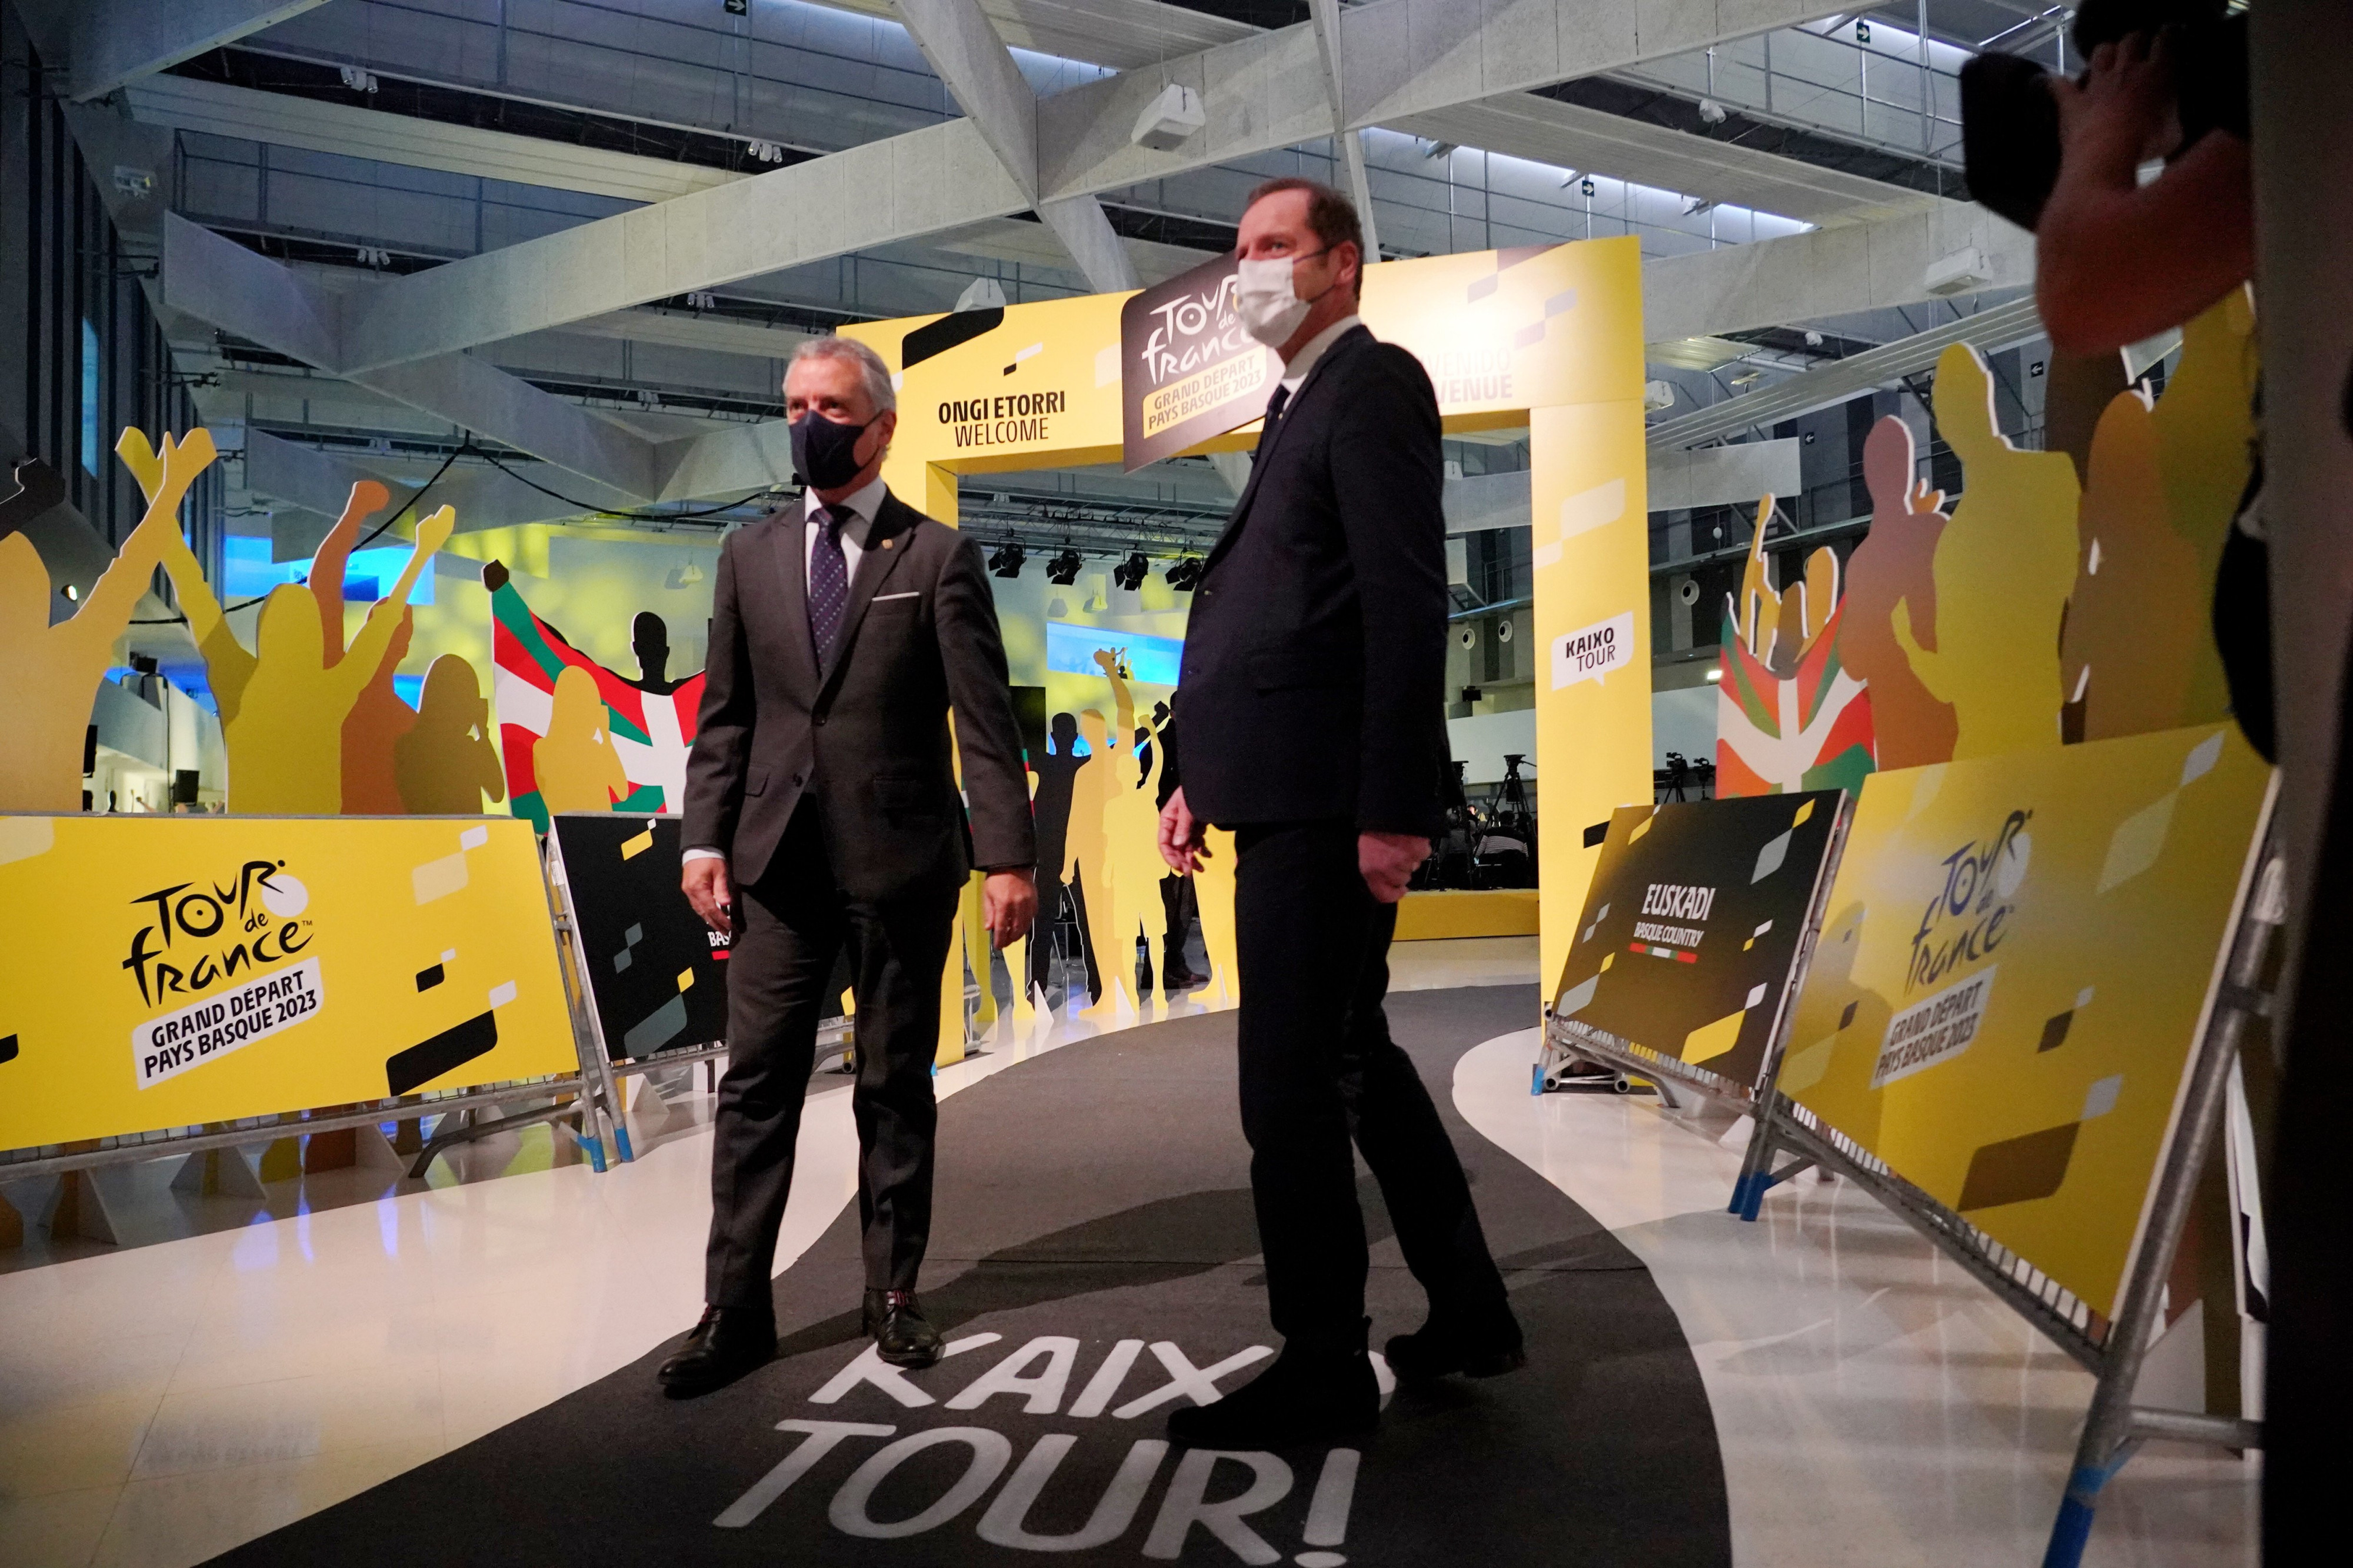 El lehendakari, Iñigo Urkullu y el director del Tour de Francia, Christian Prudhomme, durante la presentación de la Grand Départ del Tour de Francia / Iñaki Berasaluce (Europa Press)